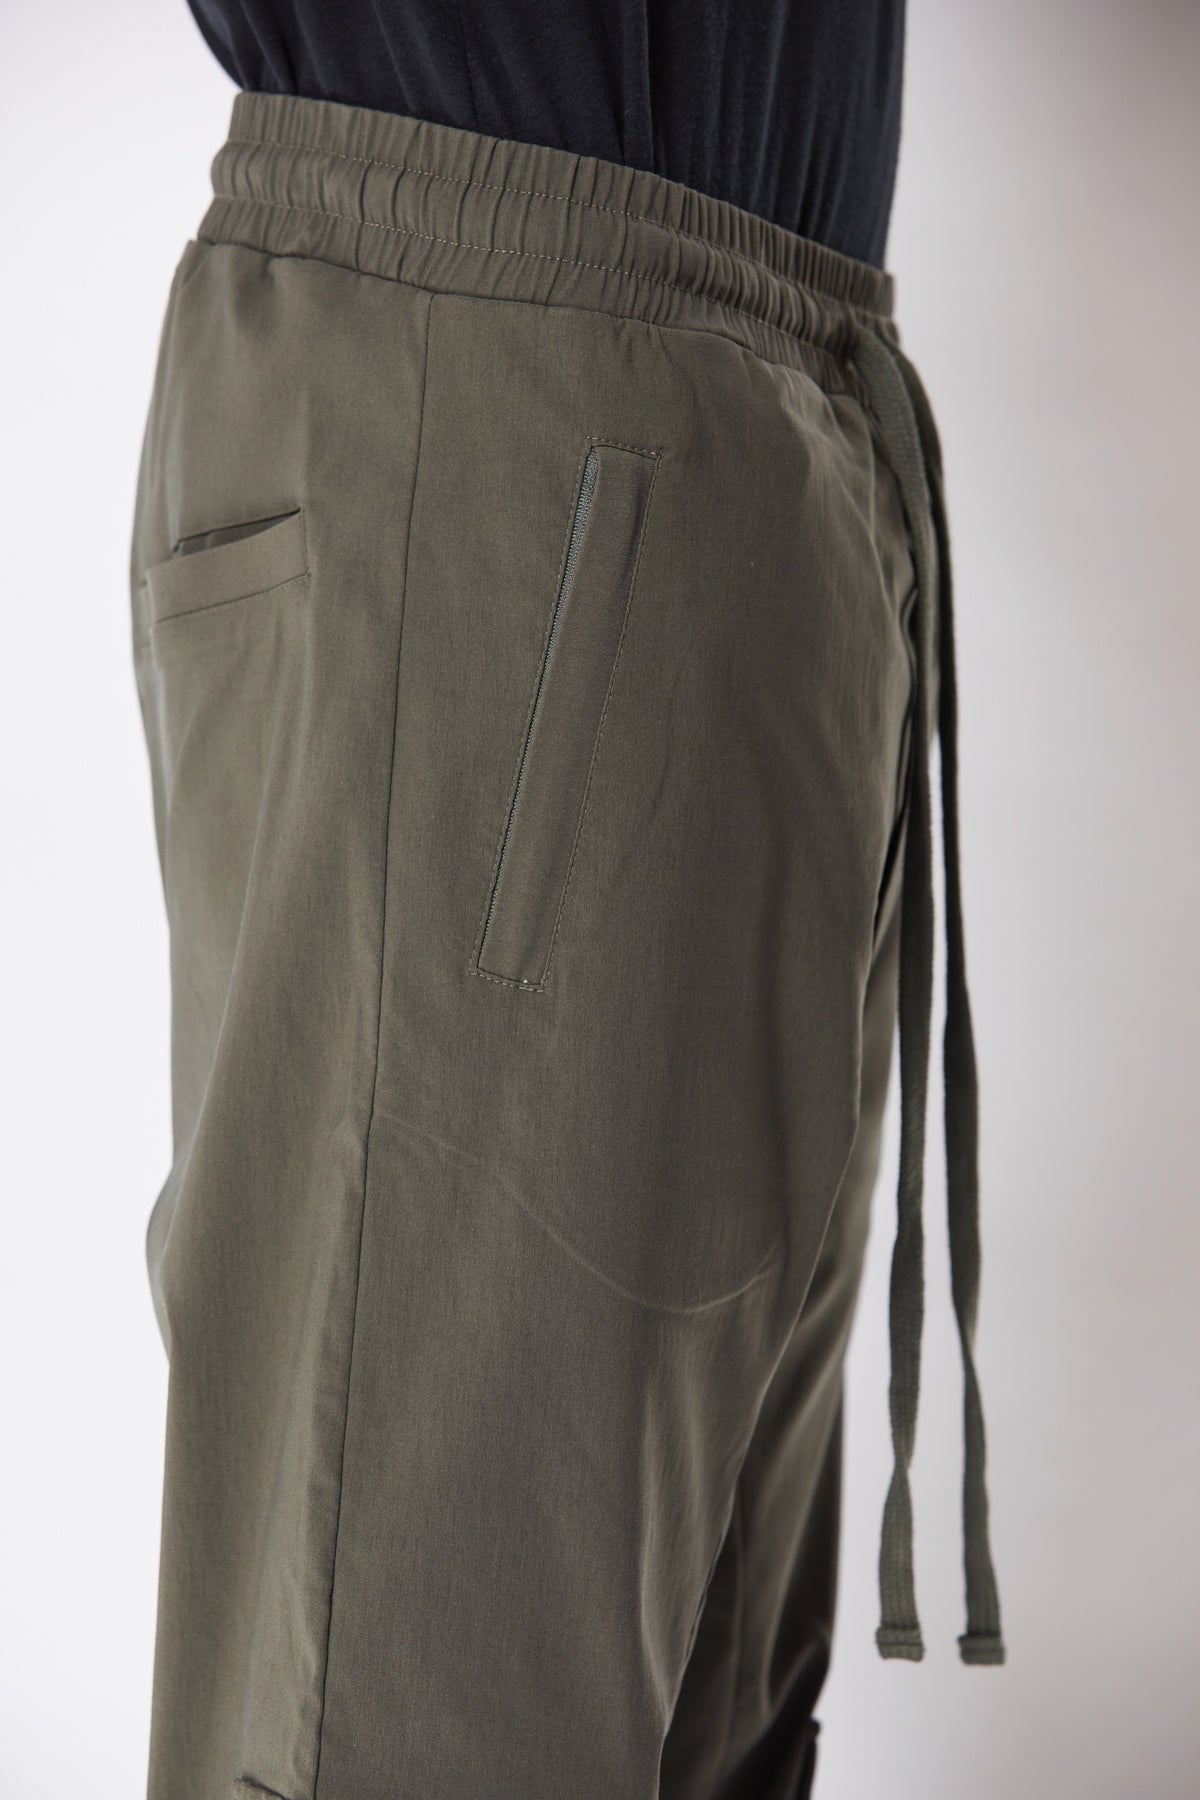 thom/krom M ST 436 Drop Crotch Cargo Pants - Green